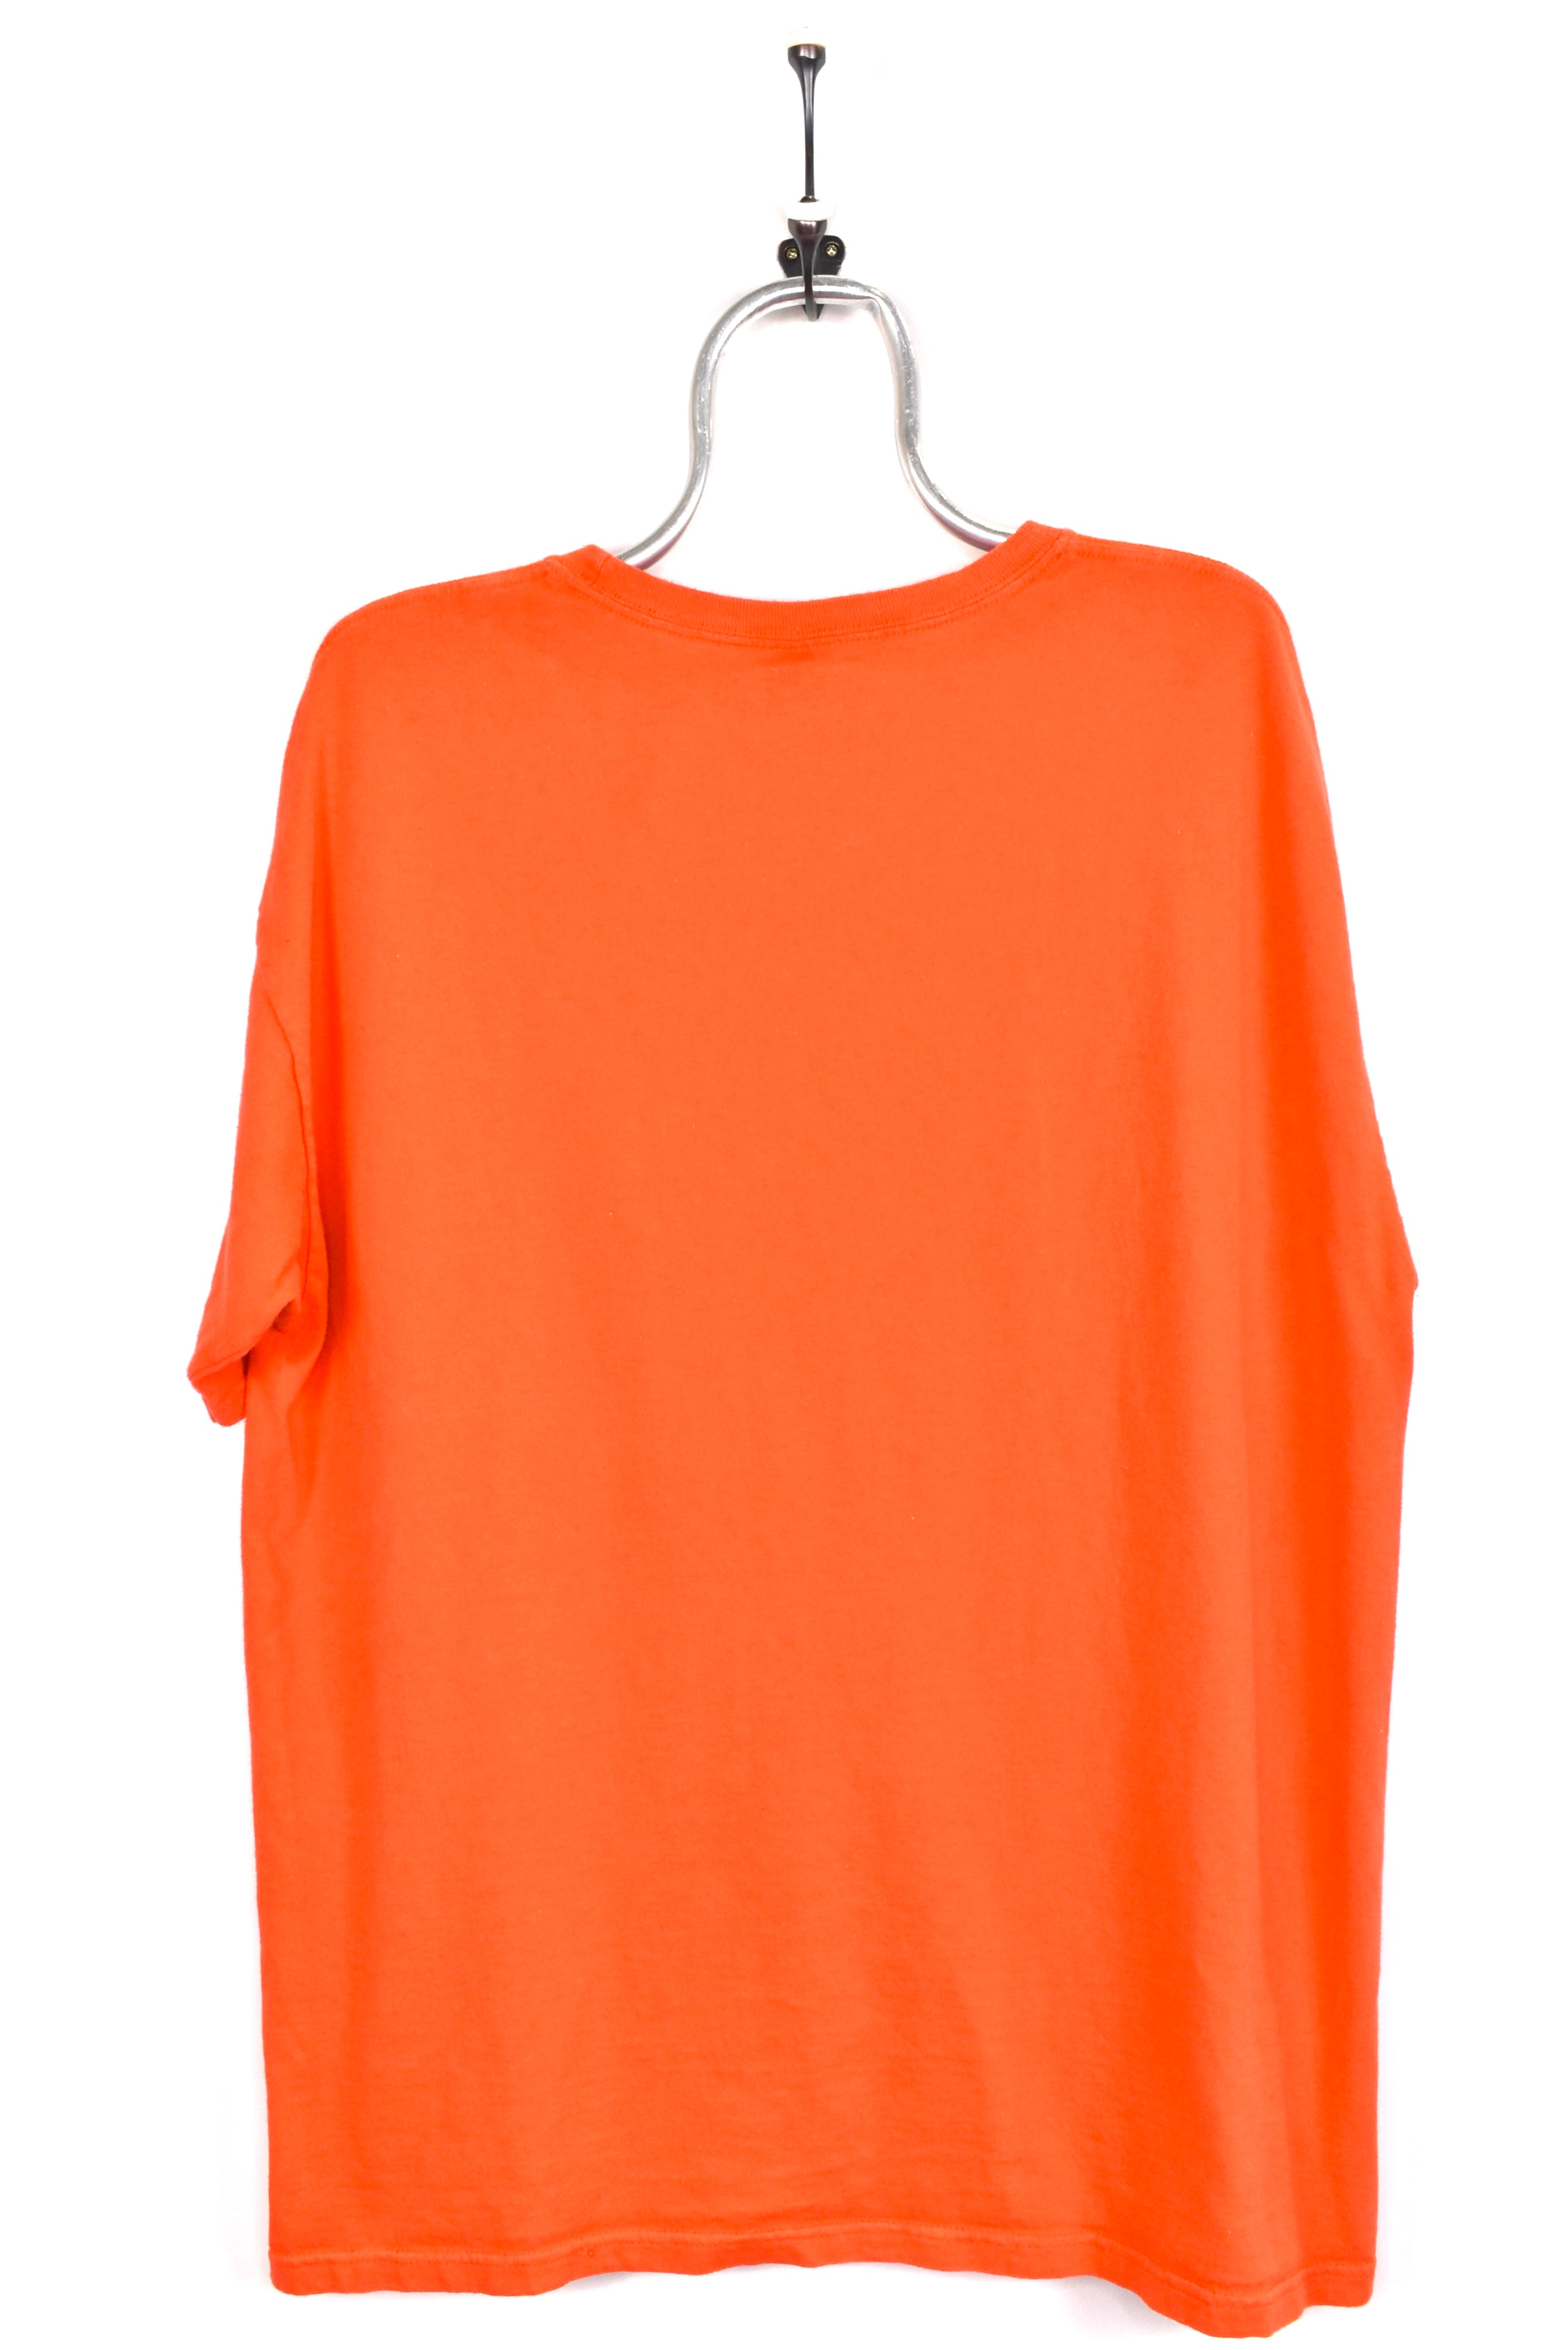 Modern Auburn University shirt, orange graphic tee - AU Large COLLEGE